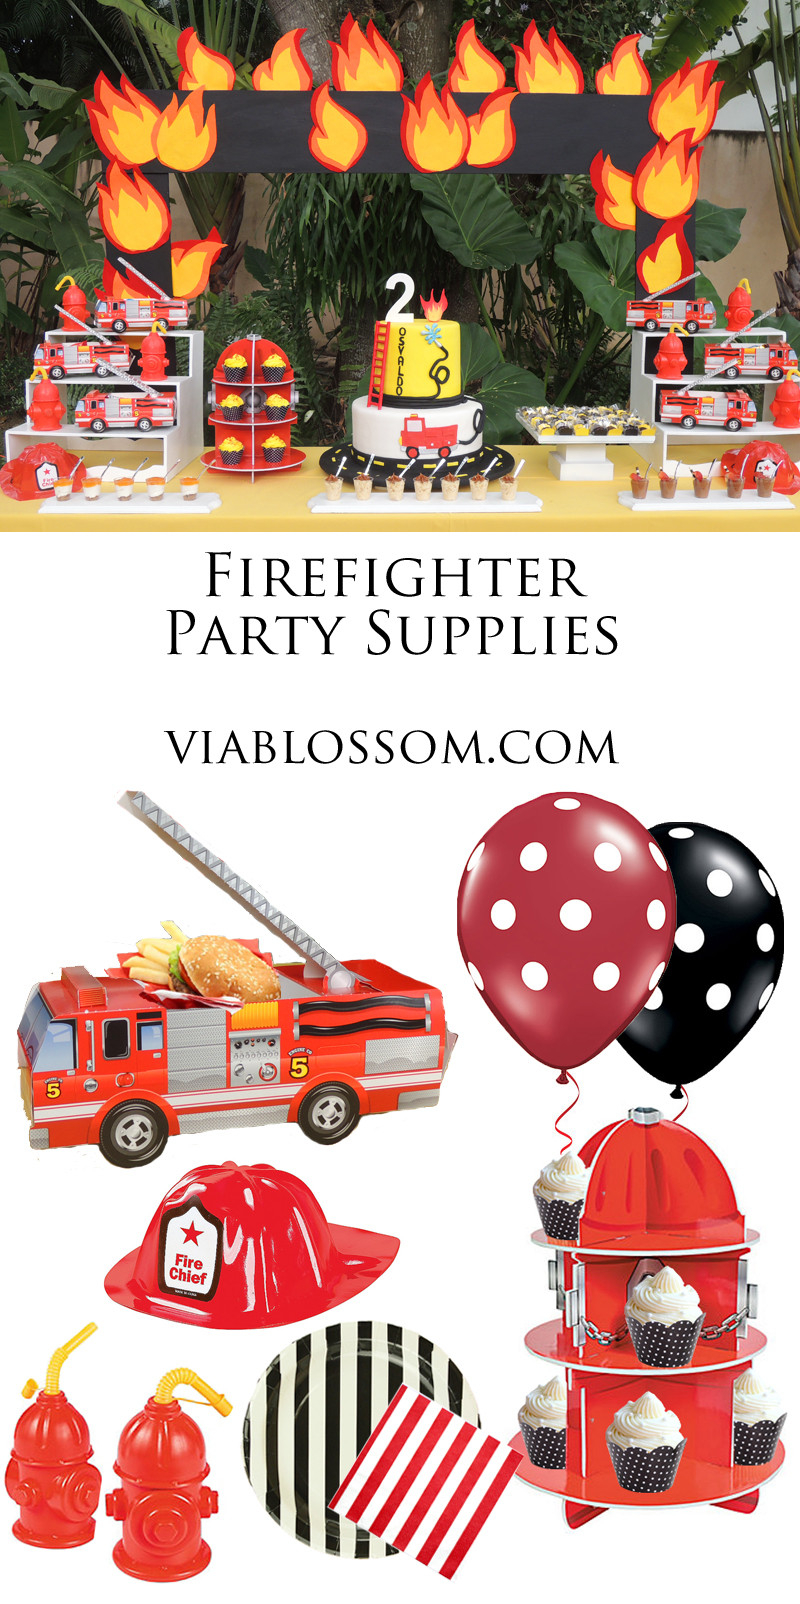 Firefighter Birthday Party Ideas
 Firefighter Birthday Party Via Blossom